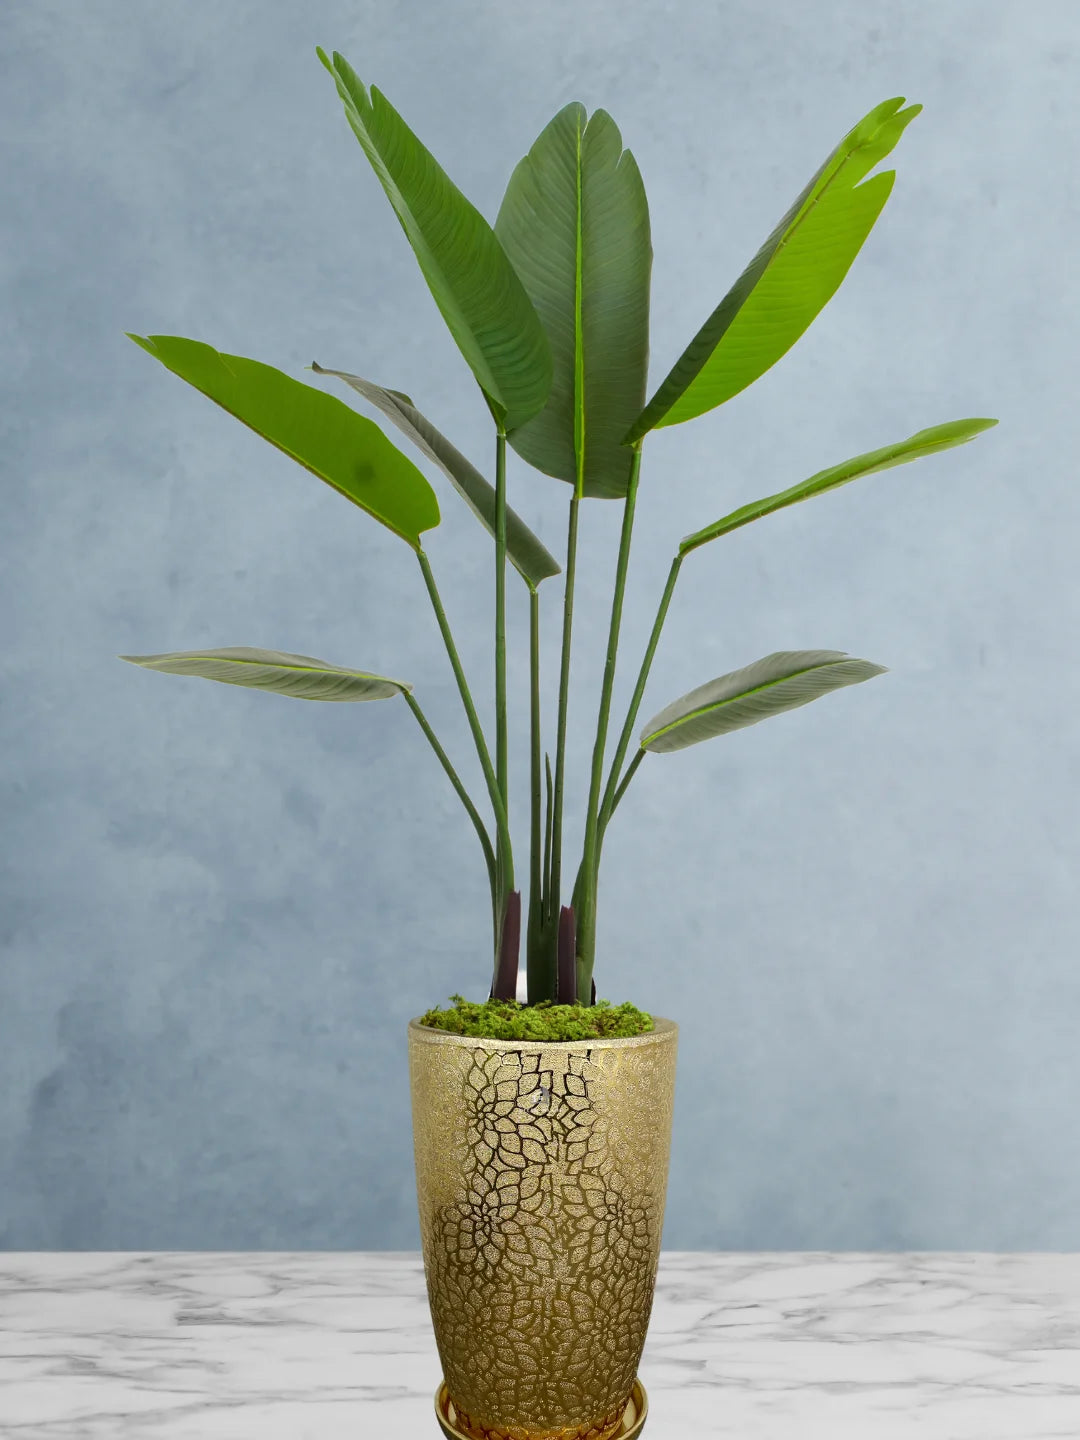 Exquisite Artificial Strelitzia | Bird of Paradise Tree | 140-150cm | Includes Pot & Moss Topping | Ideal for UAE Interiors